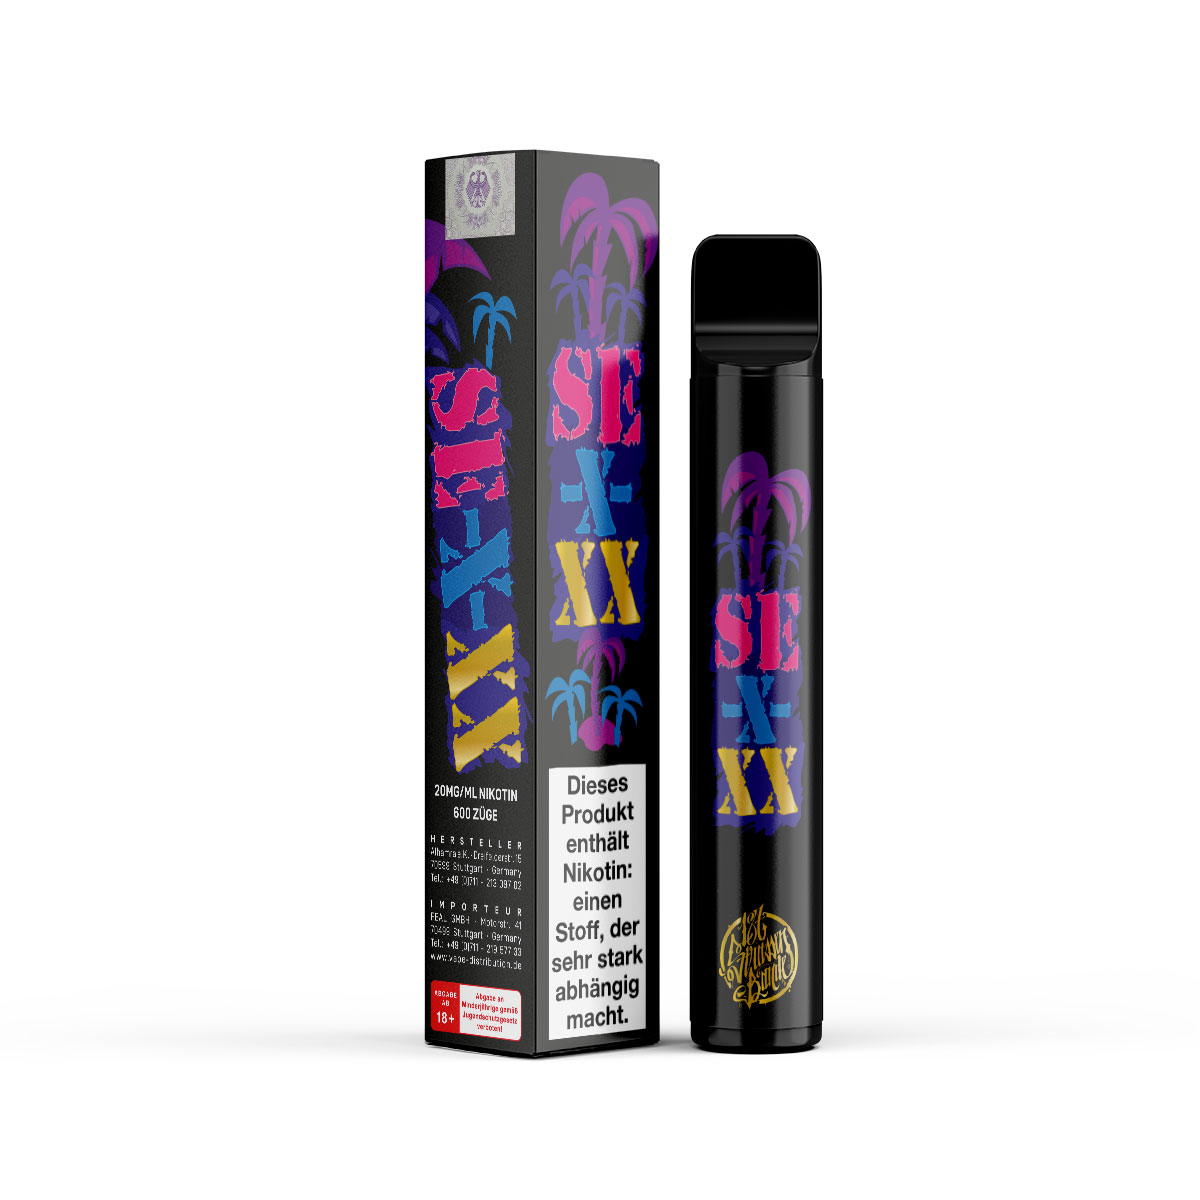 187 Strassenbande SE-X-XX Einweg E-Zigarette 20mg/ml